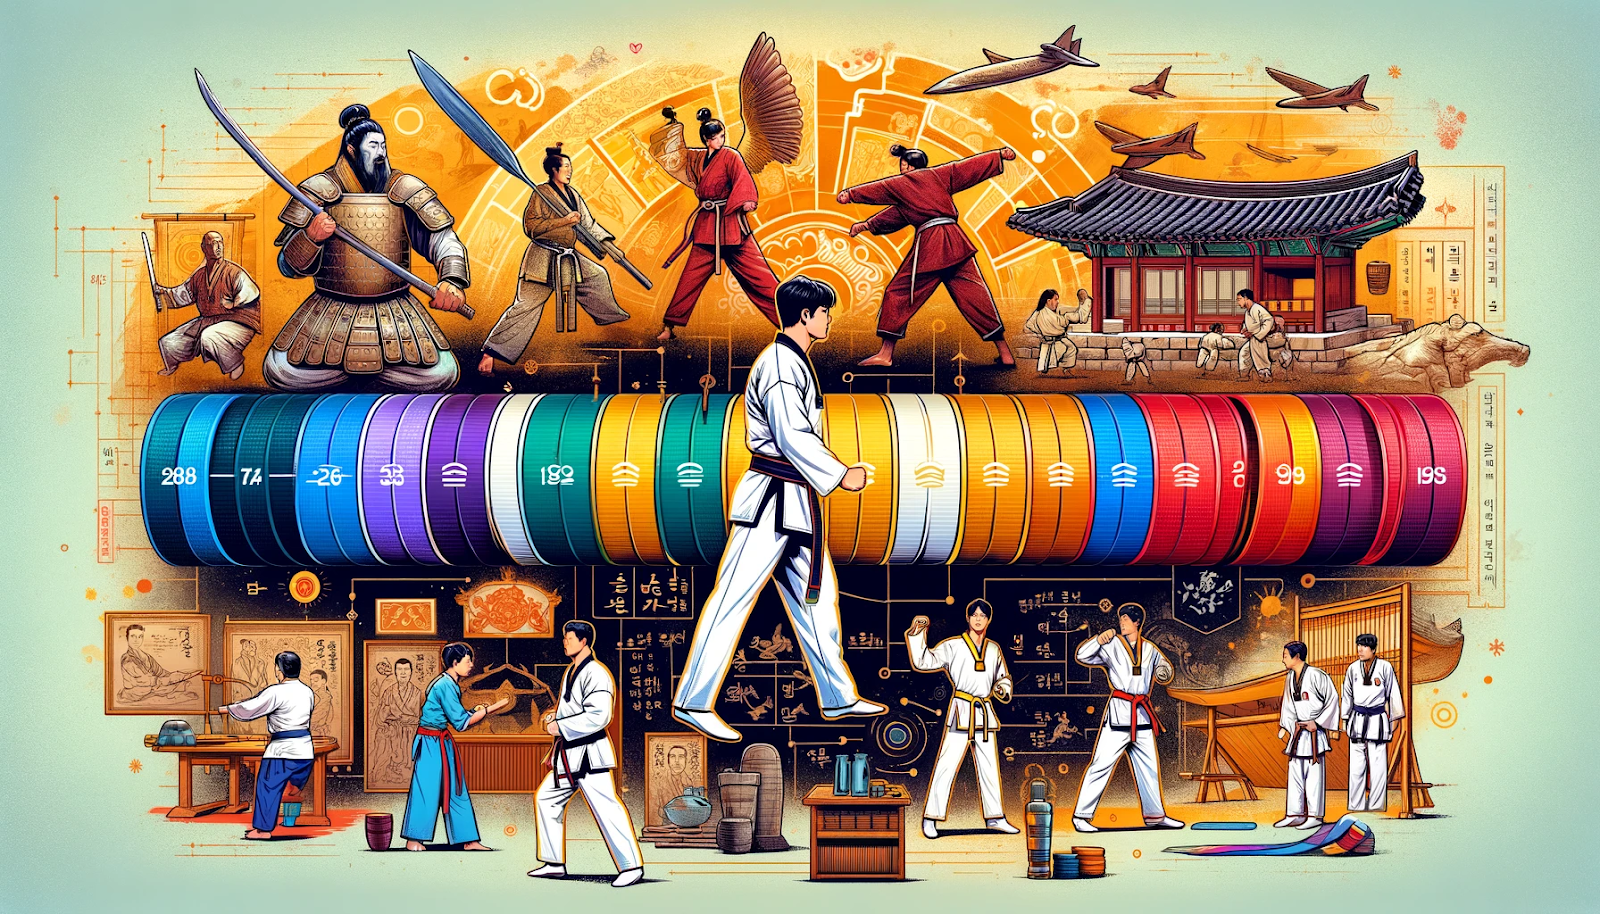 An image showing the origins of the taekwondo belt.
